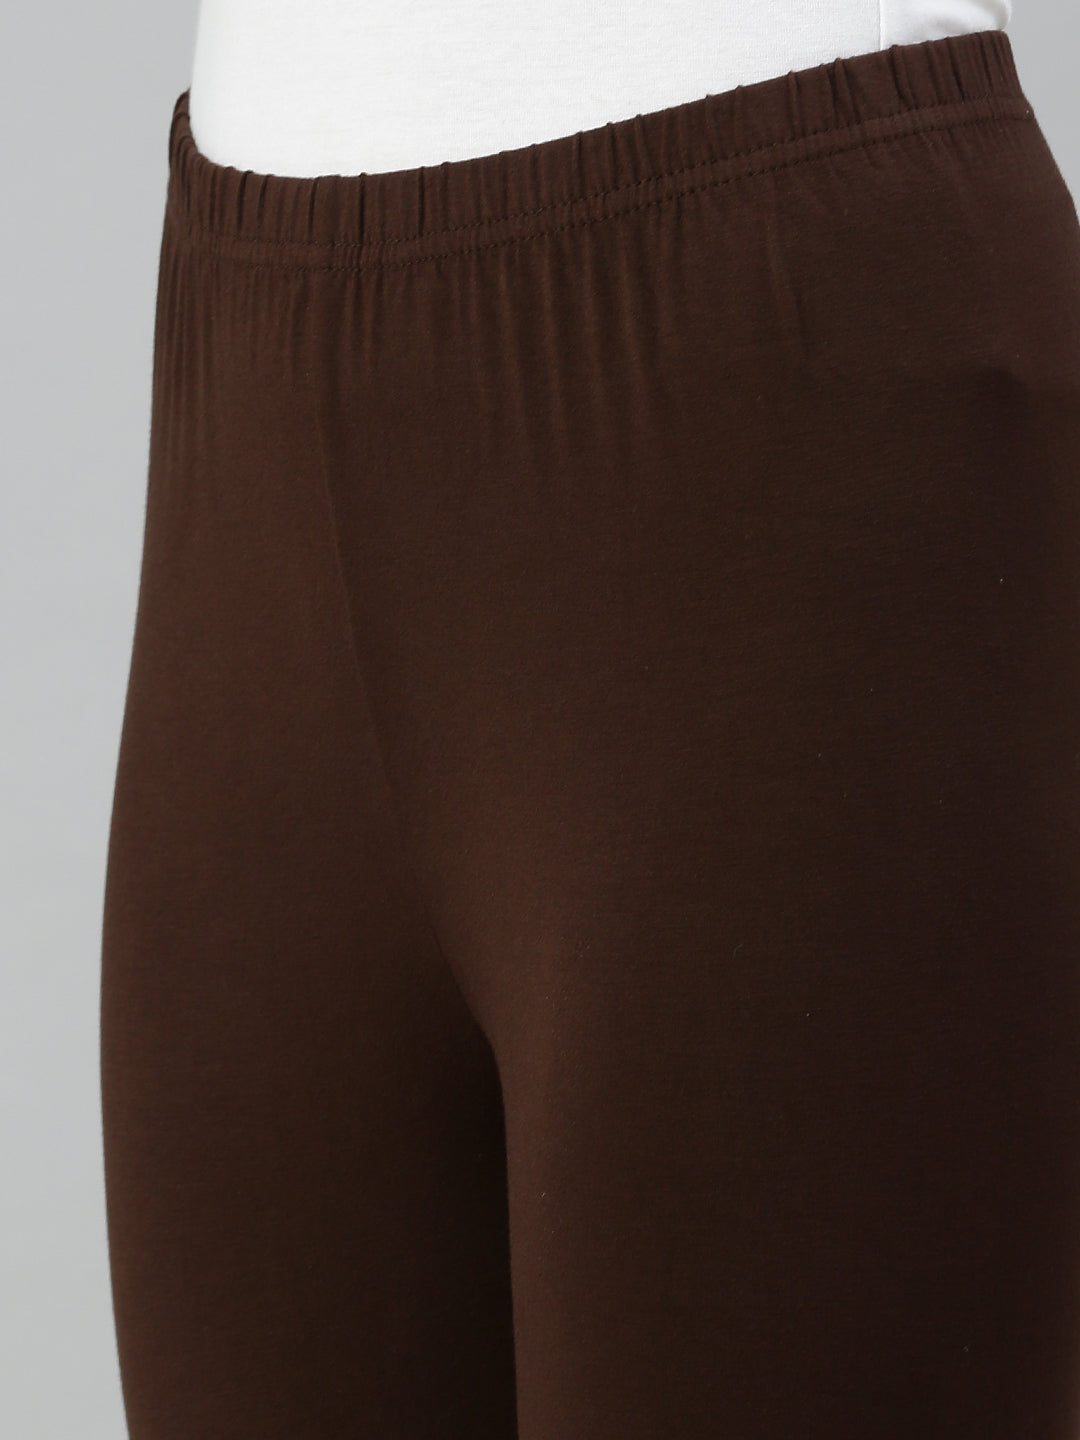 Shop Prisma's Brown Capri Leggings for Comfortable and Stylish